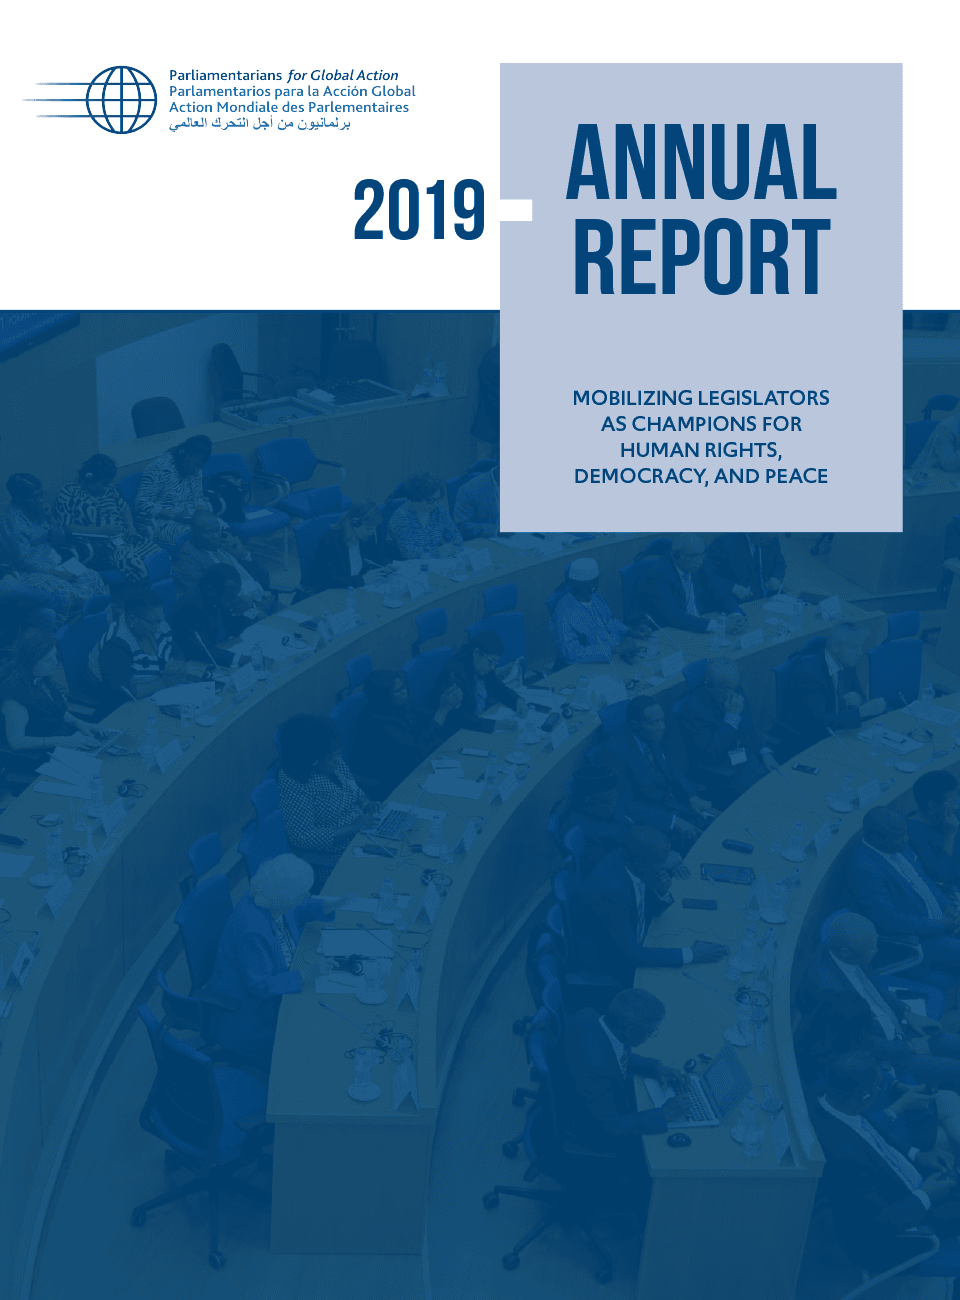 Rapport annuel de PGA 2019